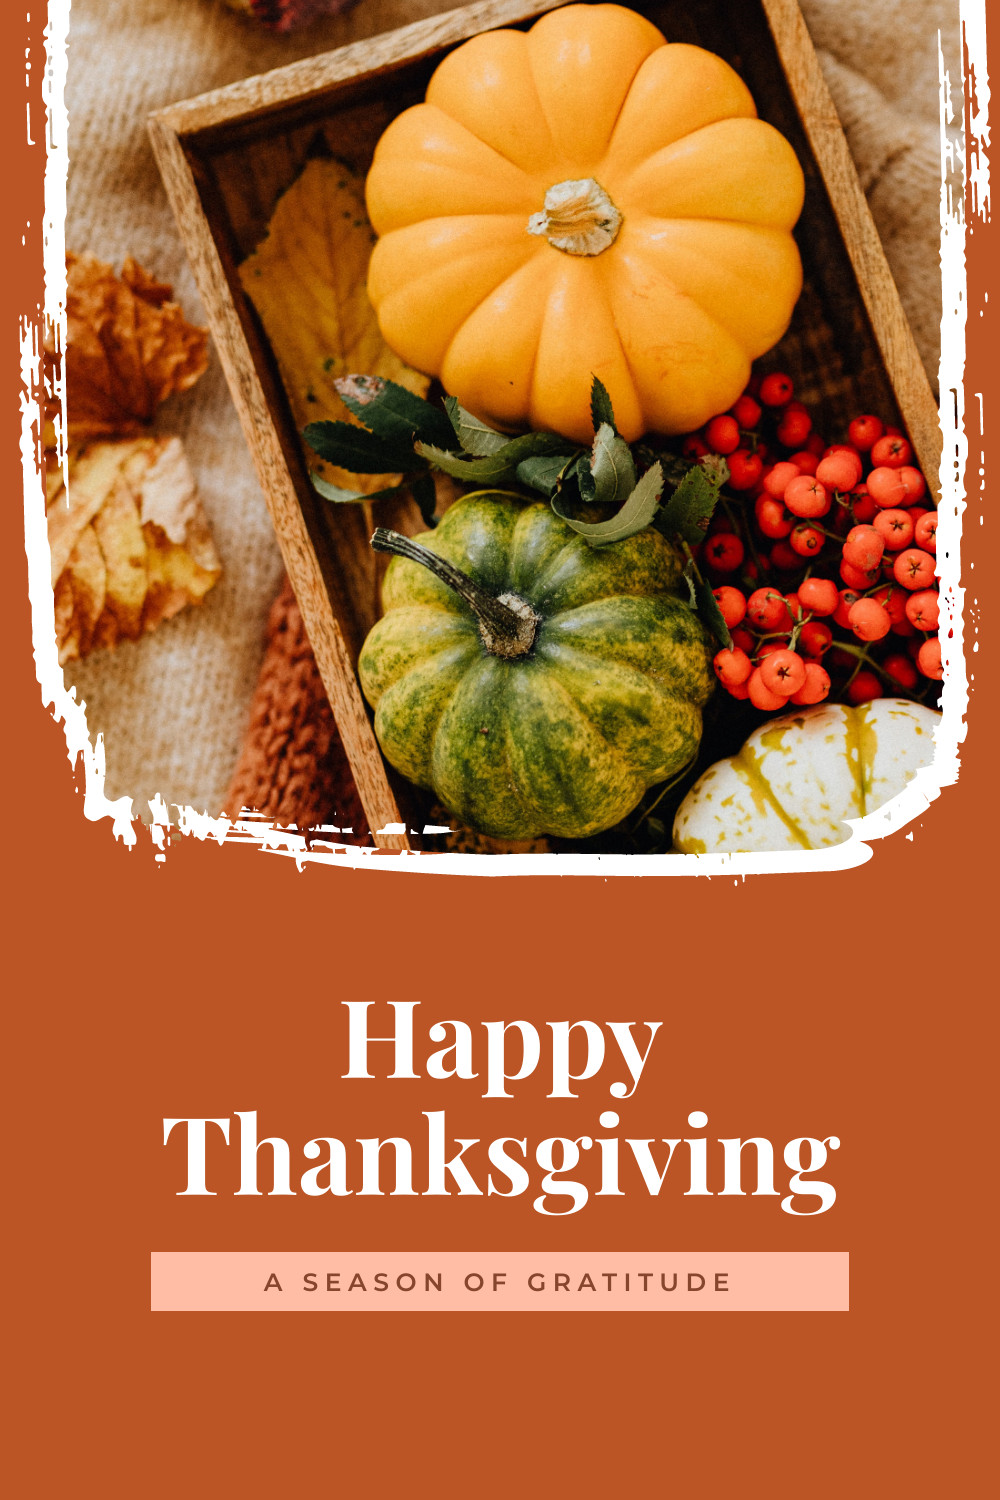 Season of Gratitude Thanksgiving